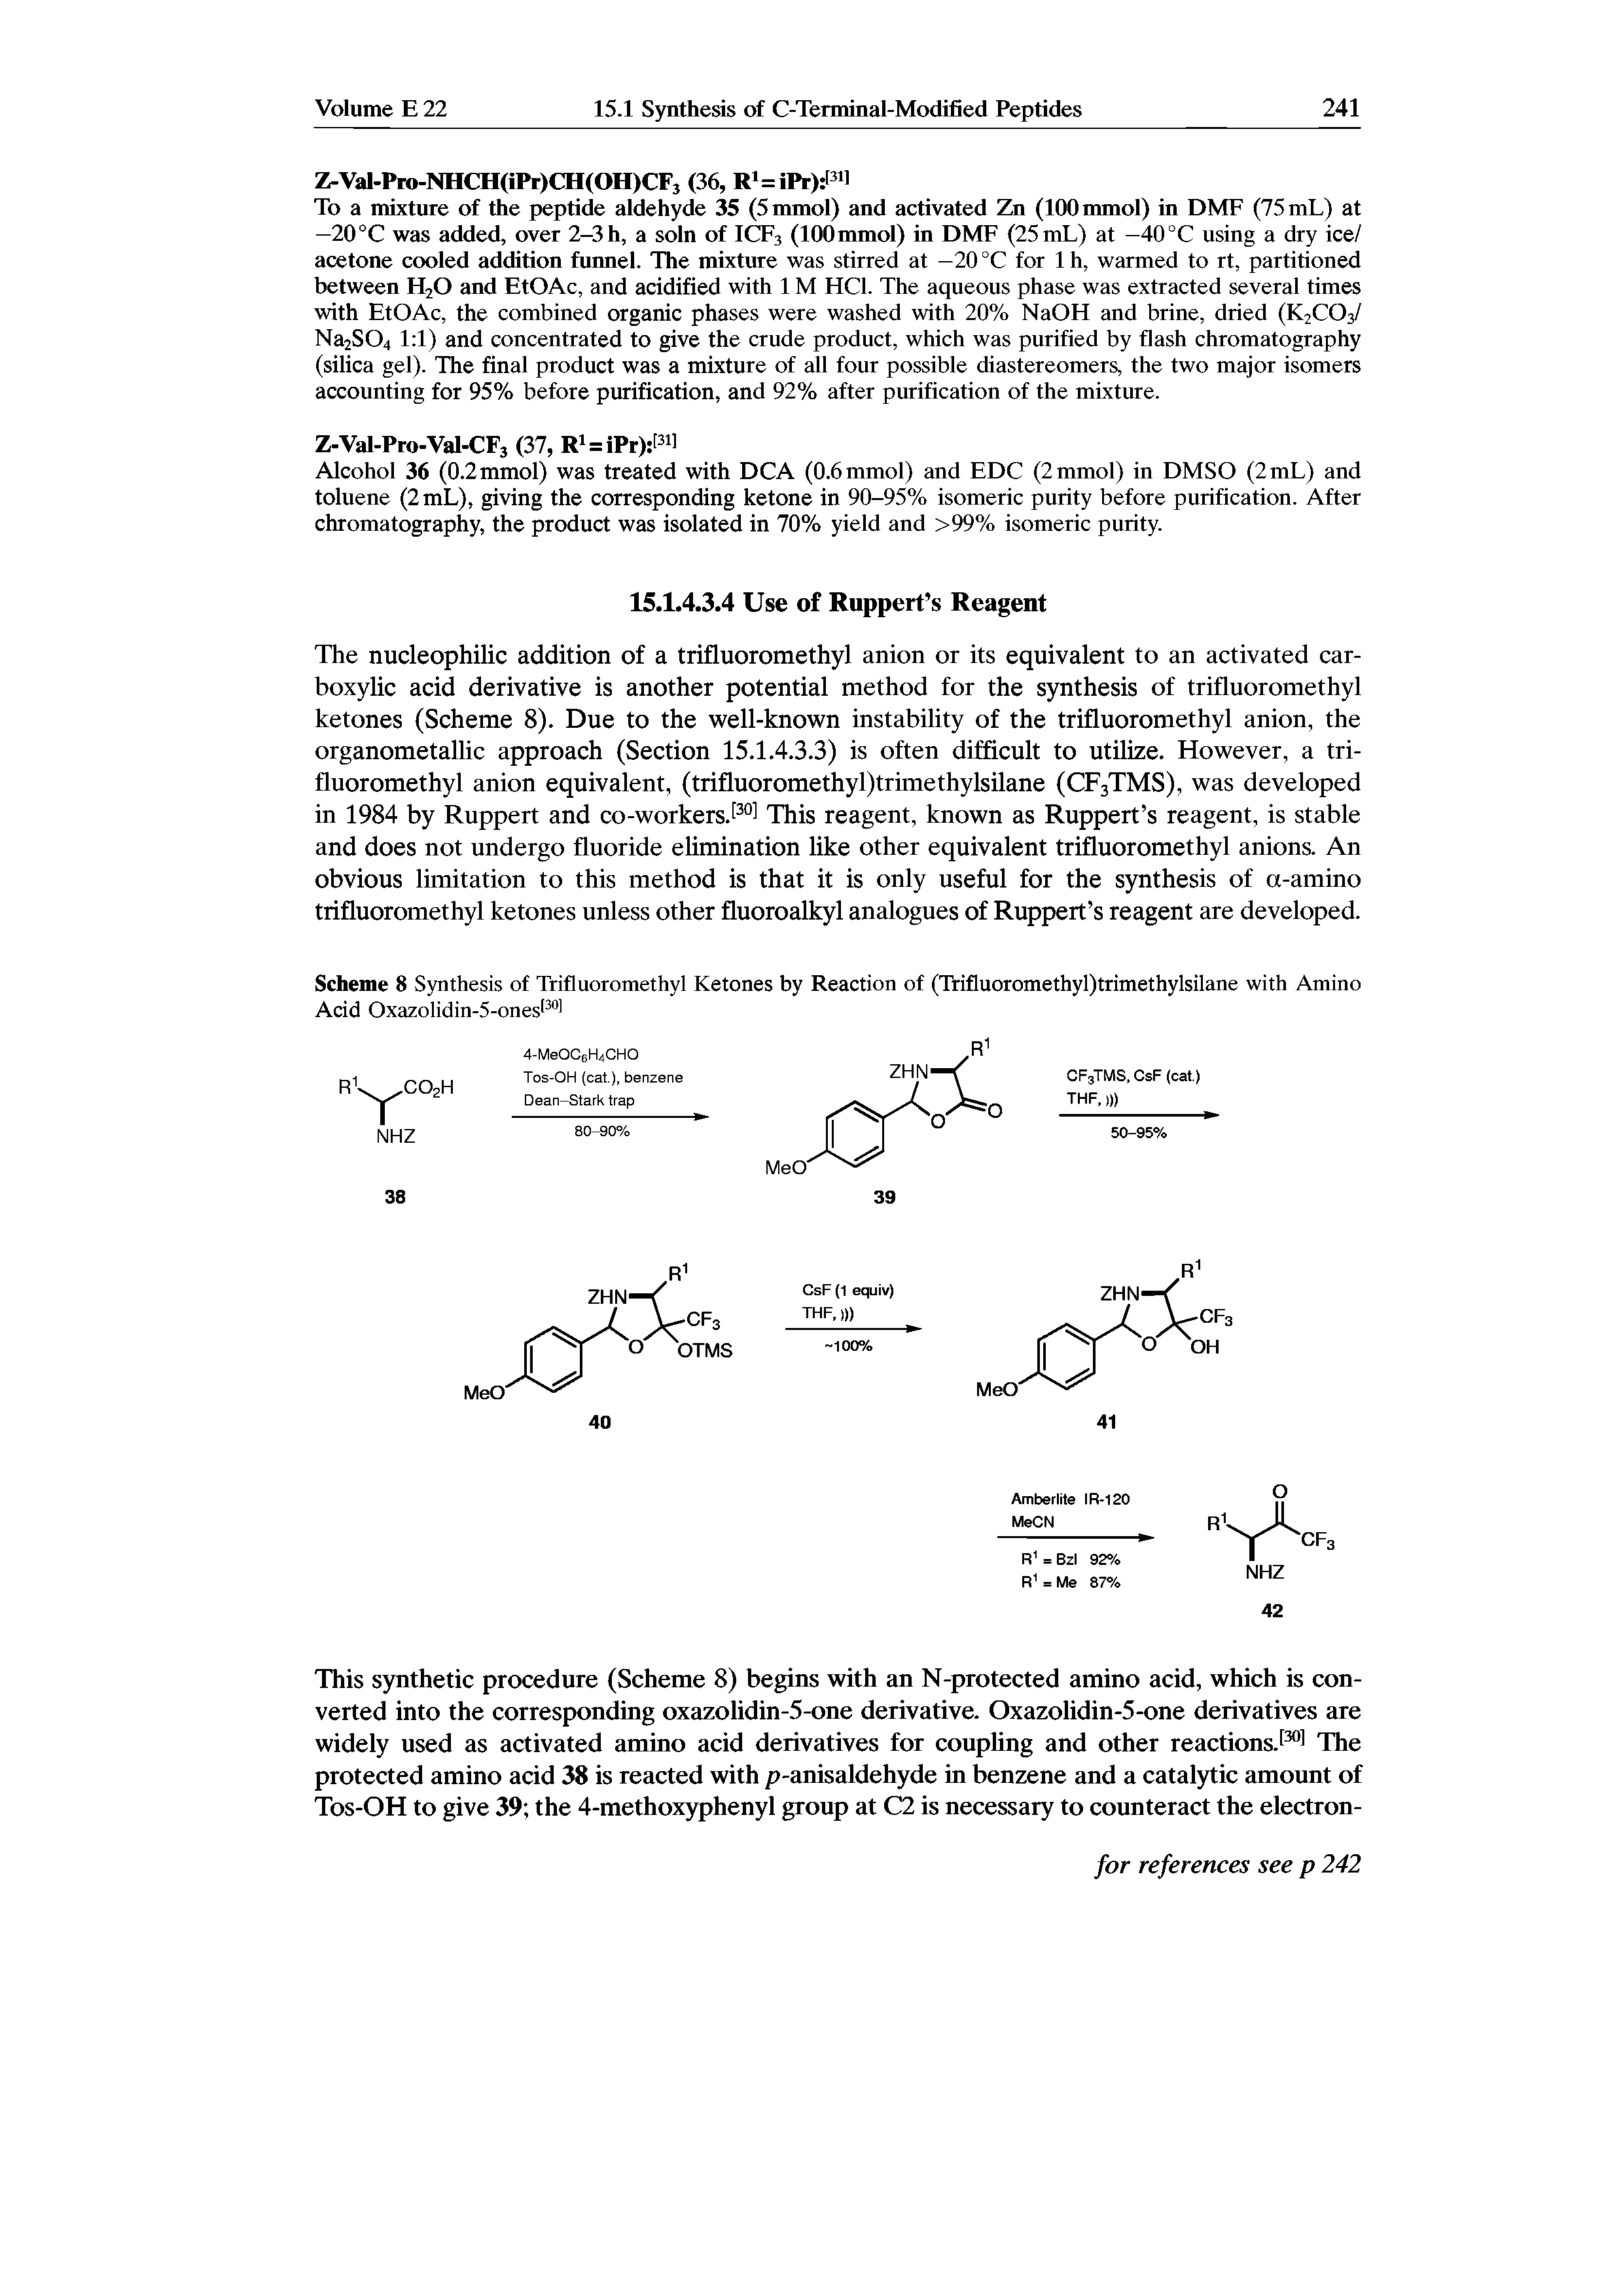 Scheme 8 Synthesis of Trifluoromethyl Ketones by Reaction of (Trifluoromethyl)trimethylsilane with Amino Acid Oxazolidin-5-ones[301...